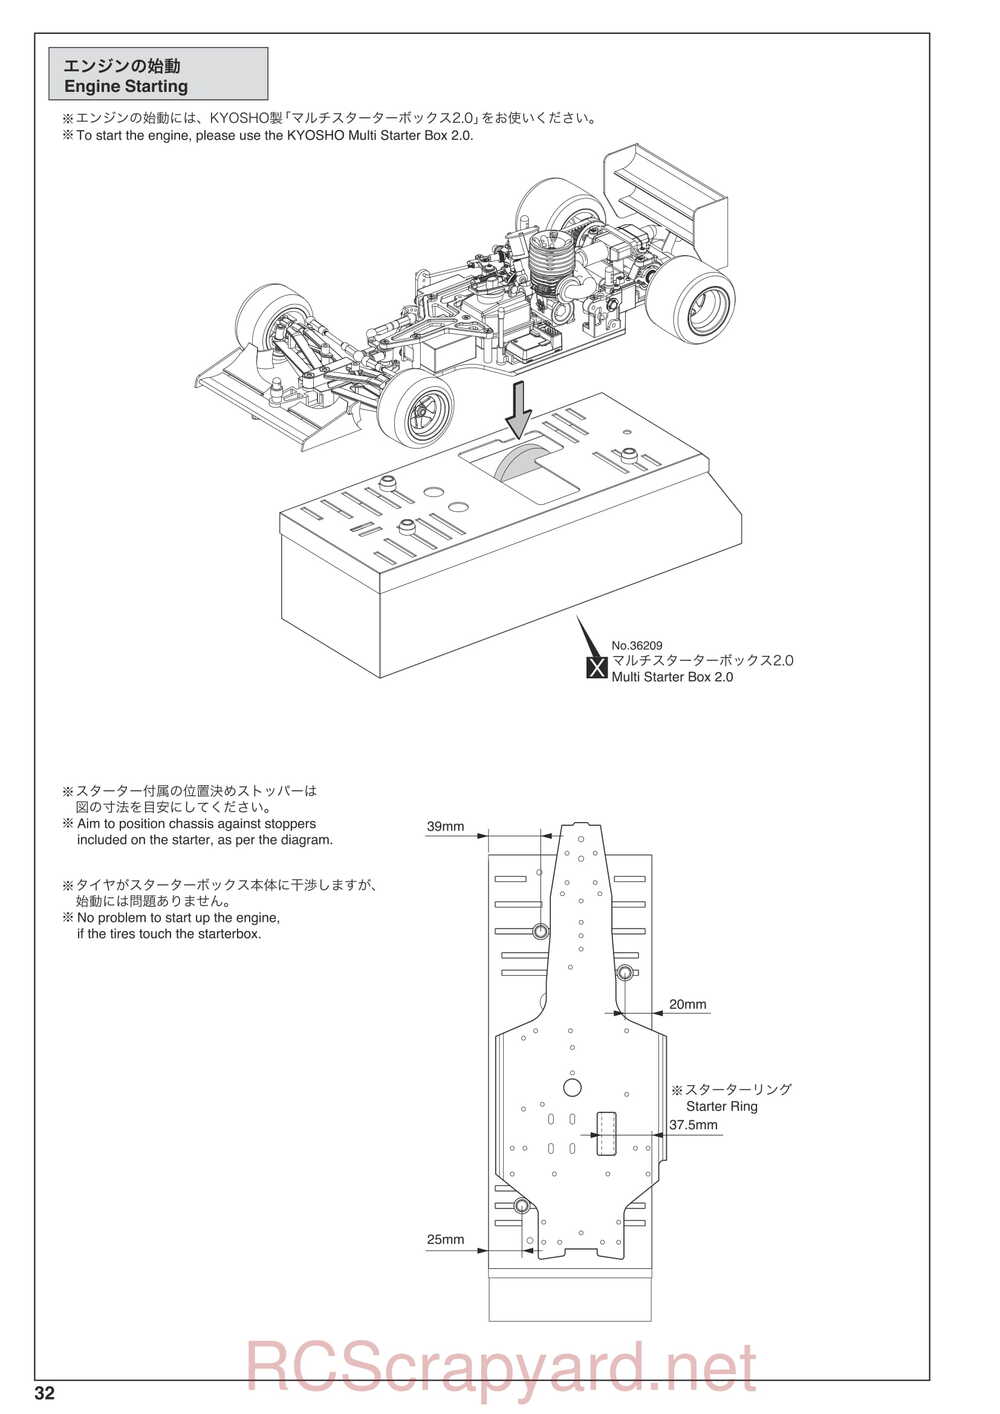 Kyosho - 31007 - KF01 - Manual - Page 32